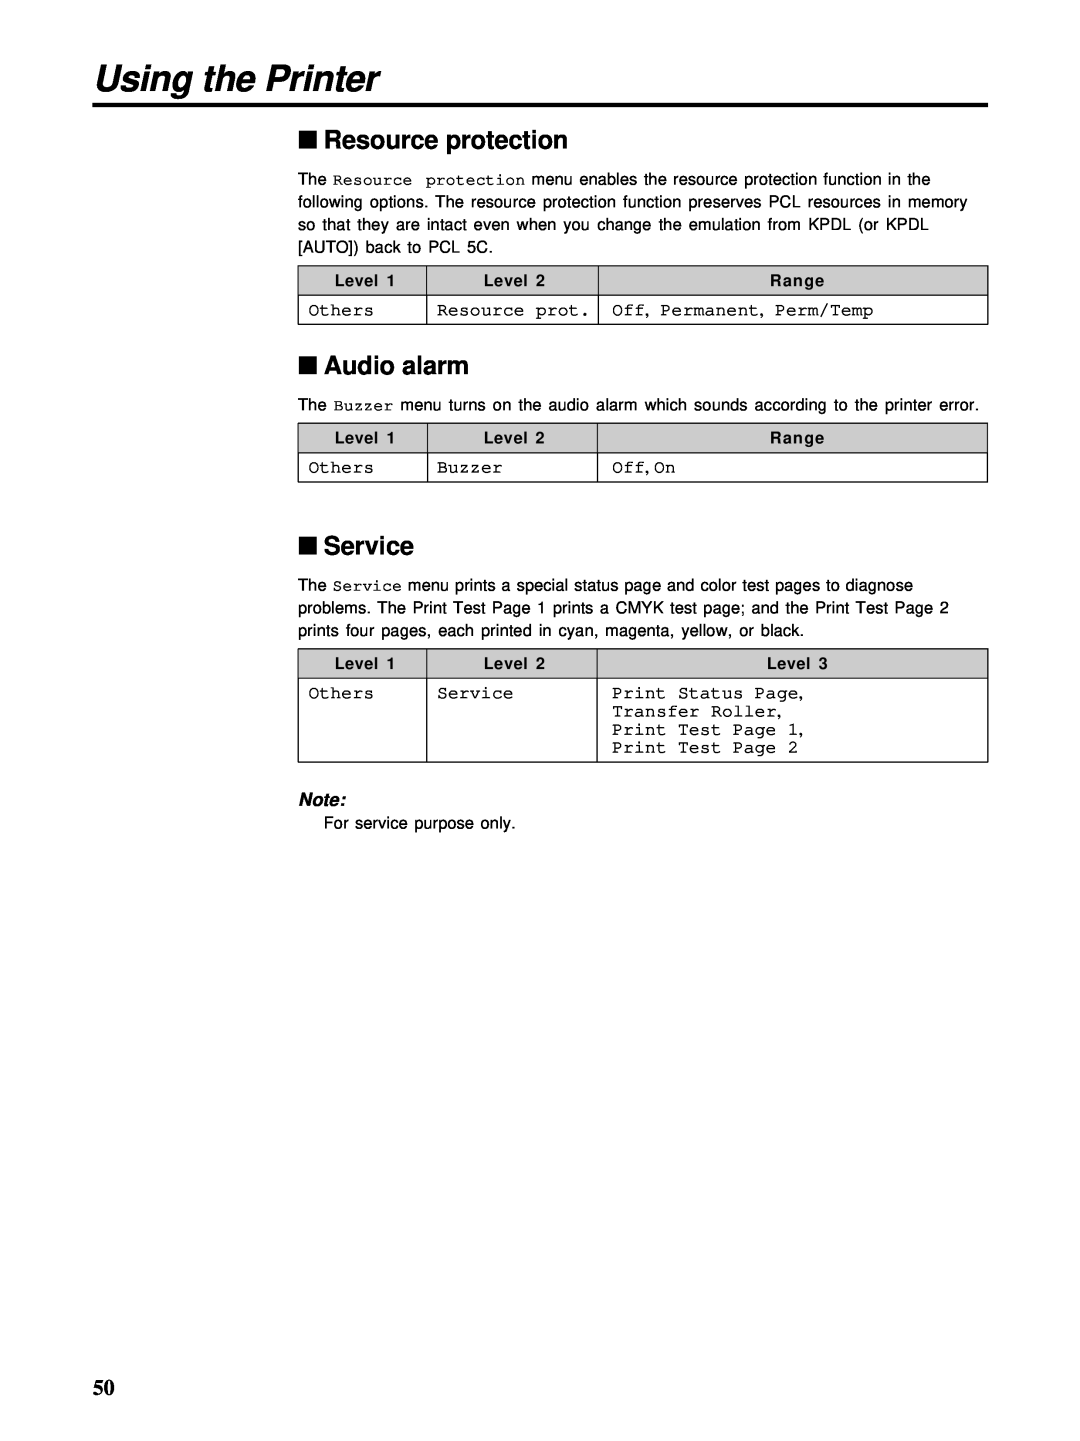 HP Ci 1100 manual Resource protection, Audio alarm, Service, Using the Printer 